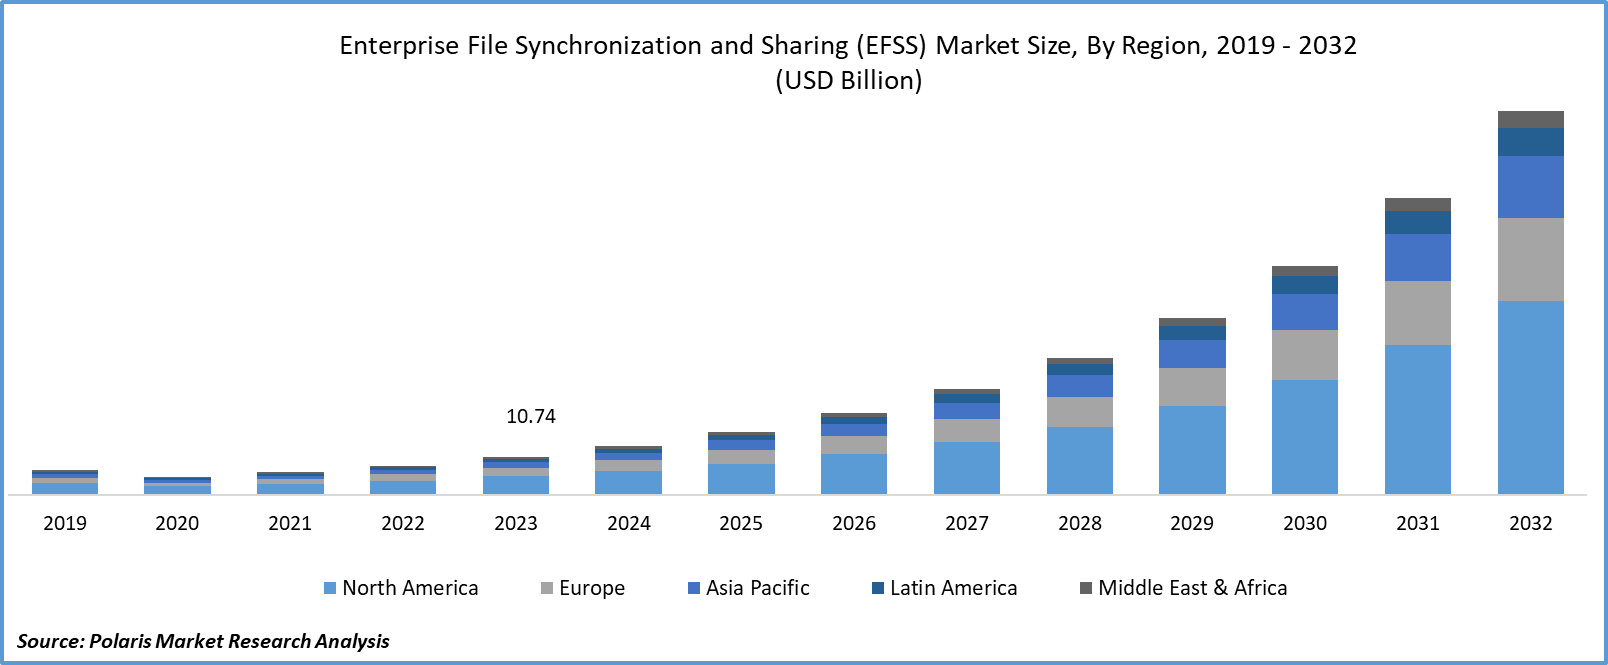 Enterprise File Synchronization and Sharing (EFSS) Market Size